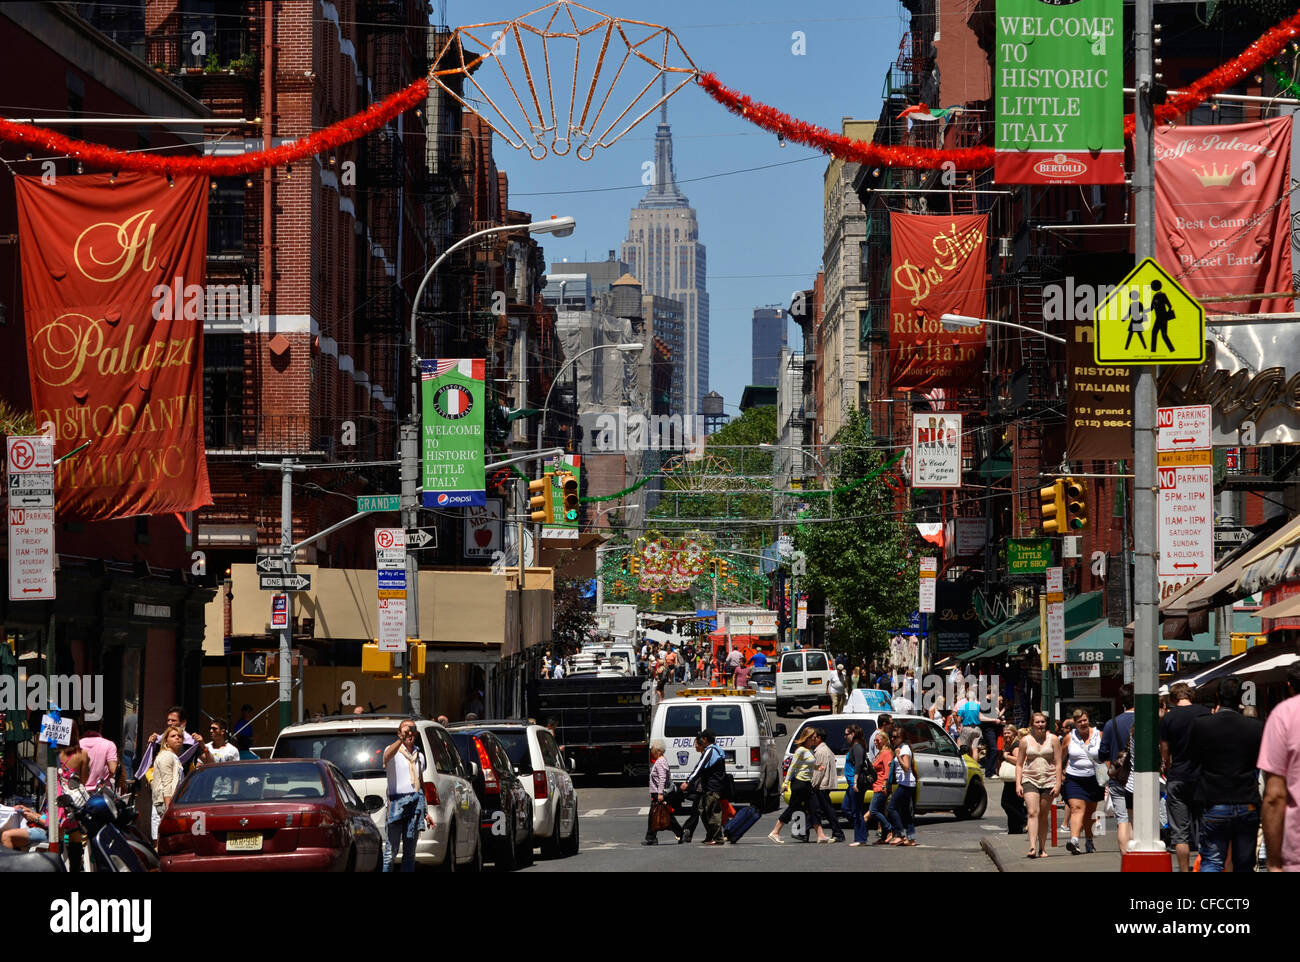 Little Italy, lower Manhattan, New York City, New York, USA Stock Photo